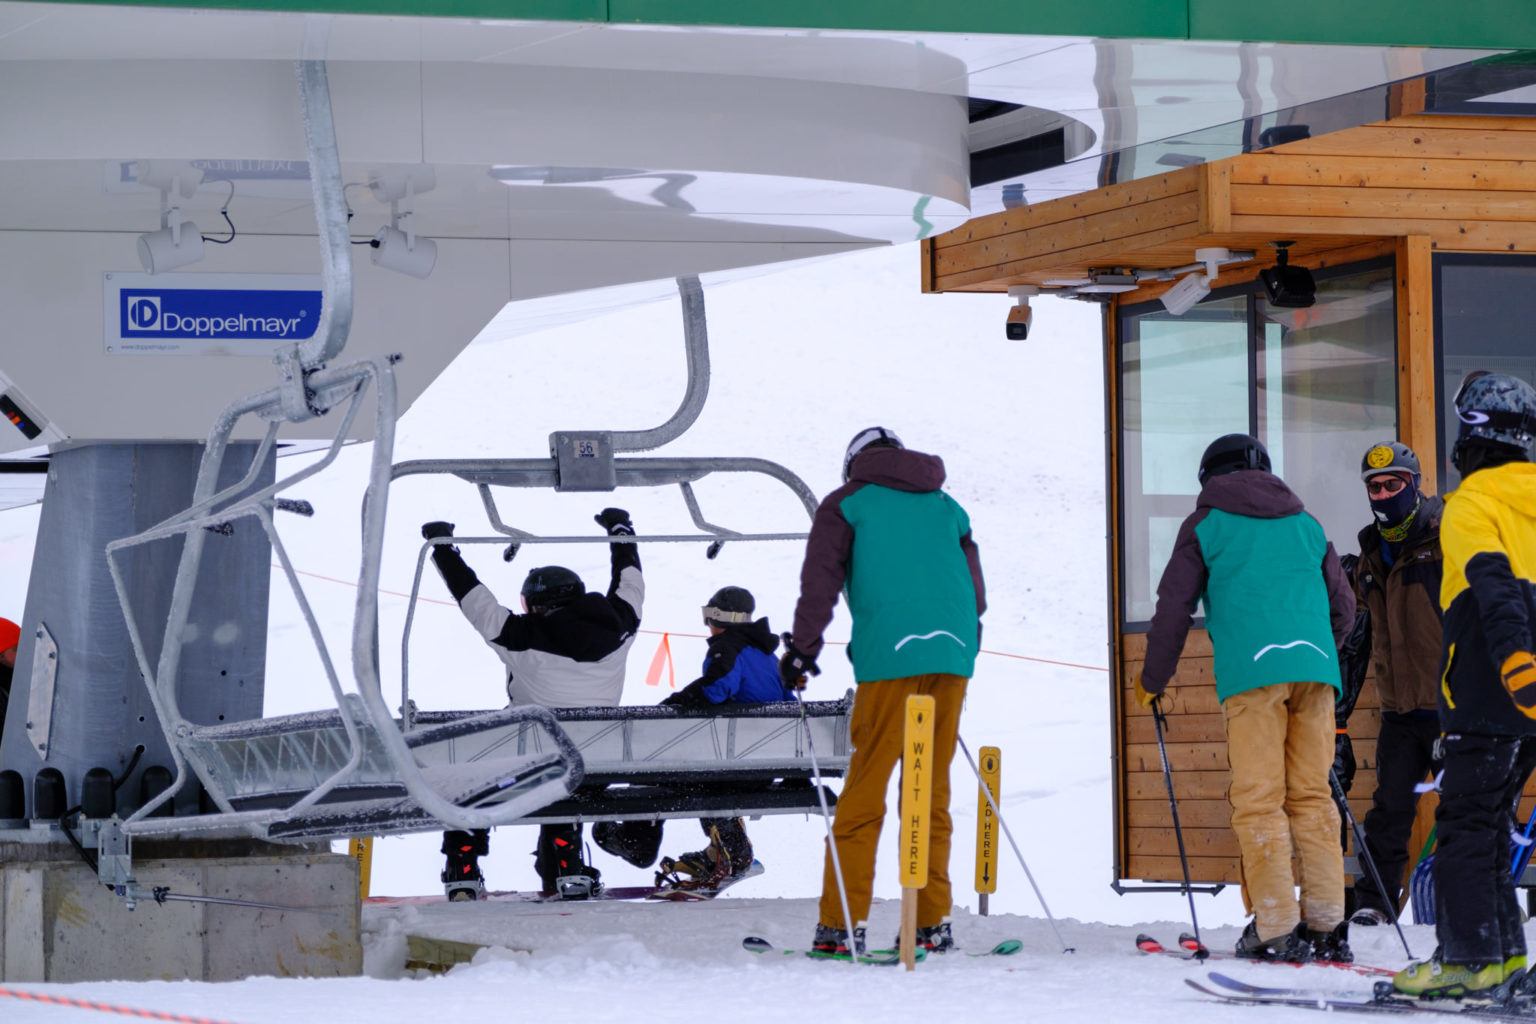 image of Saddleback Mountain Ski Resort